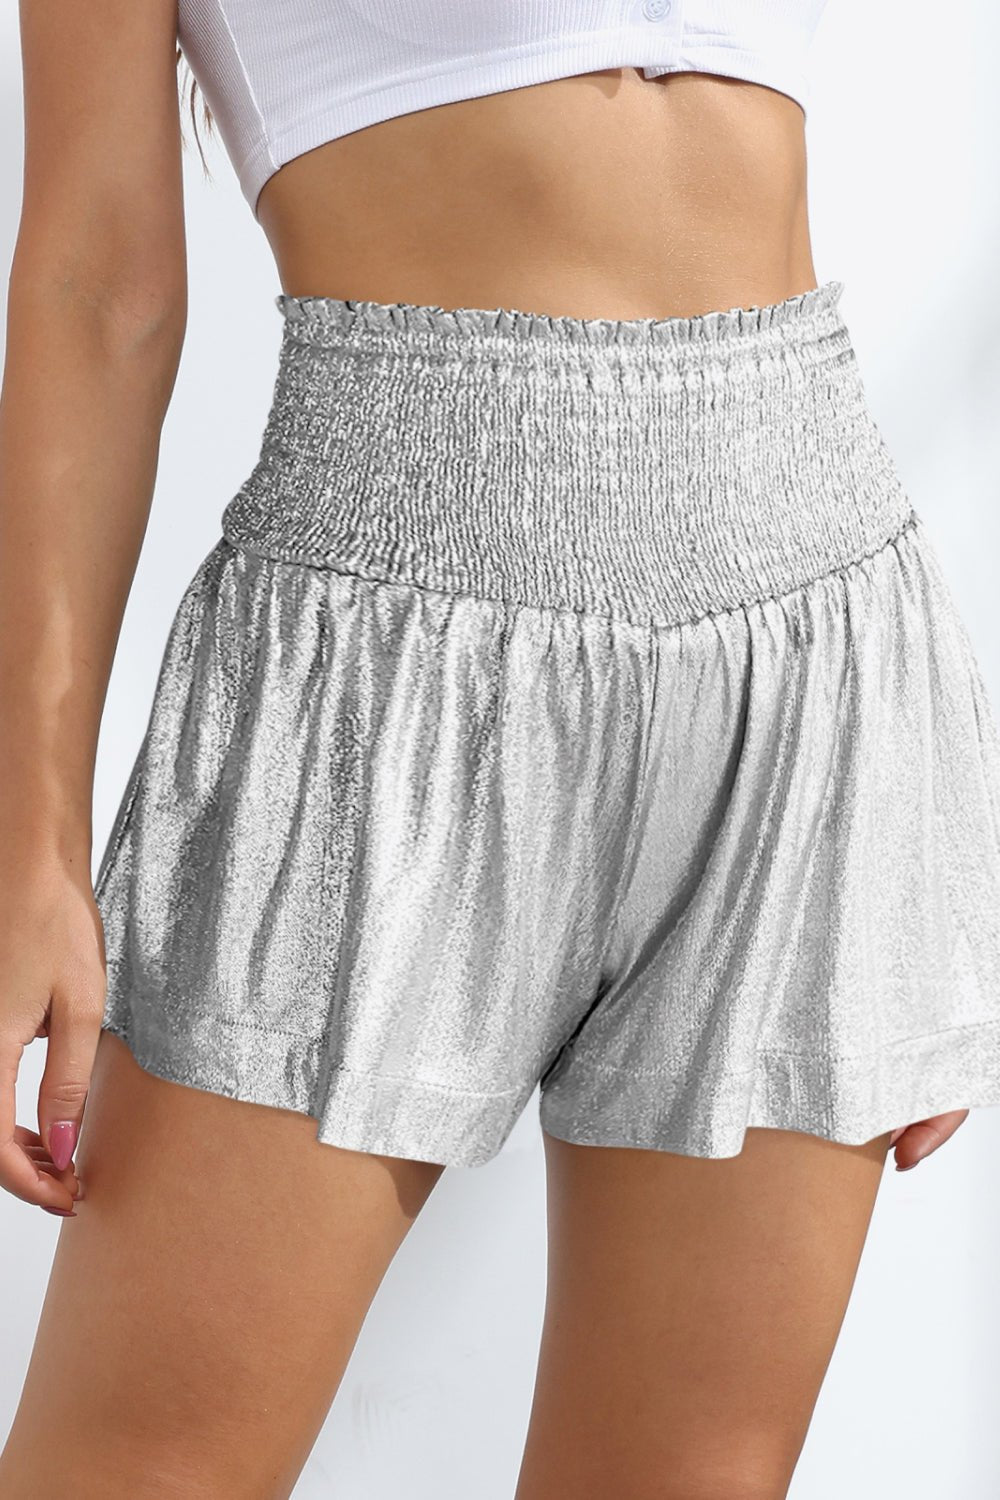 Dip Me in Glitter Shorts - Shop Shea Rock